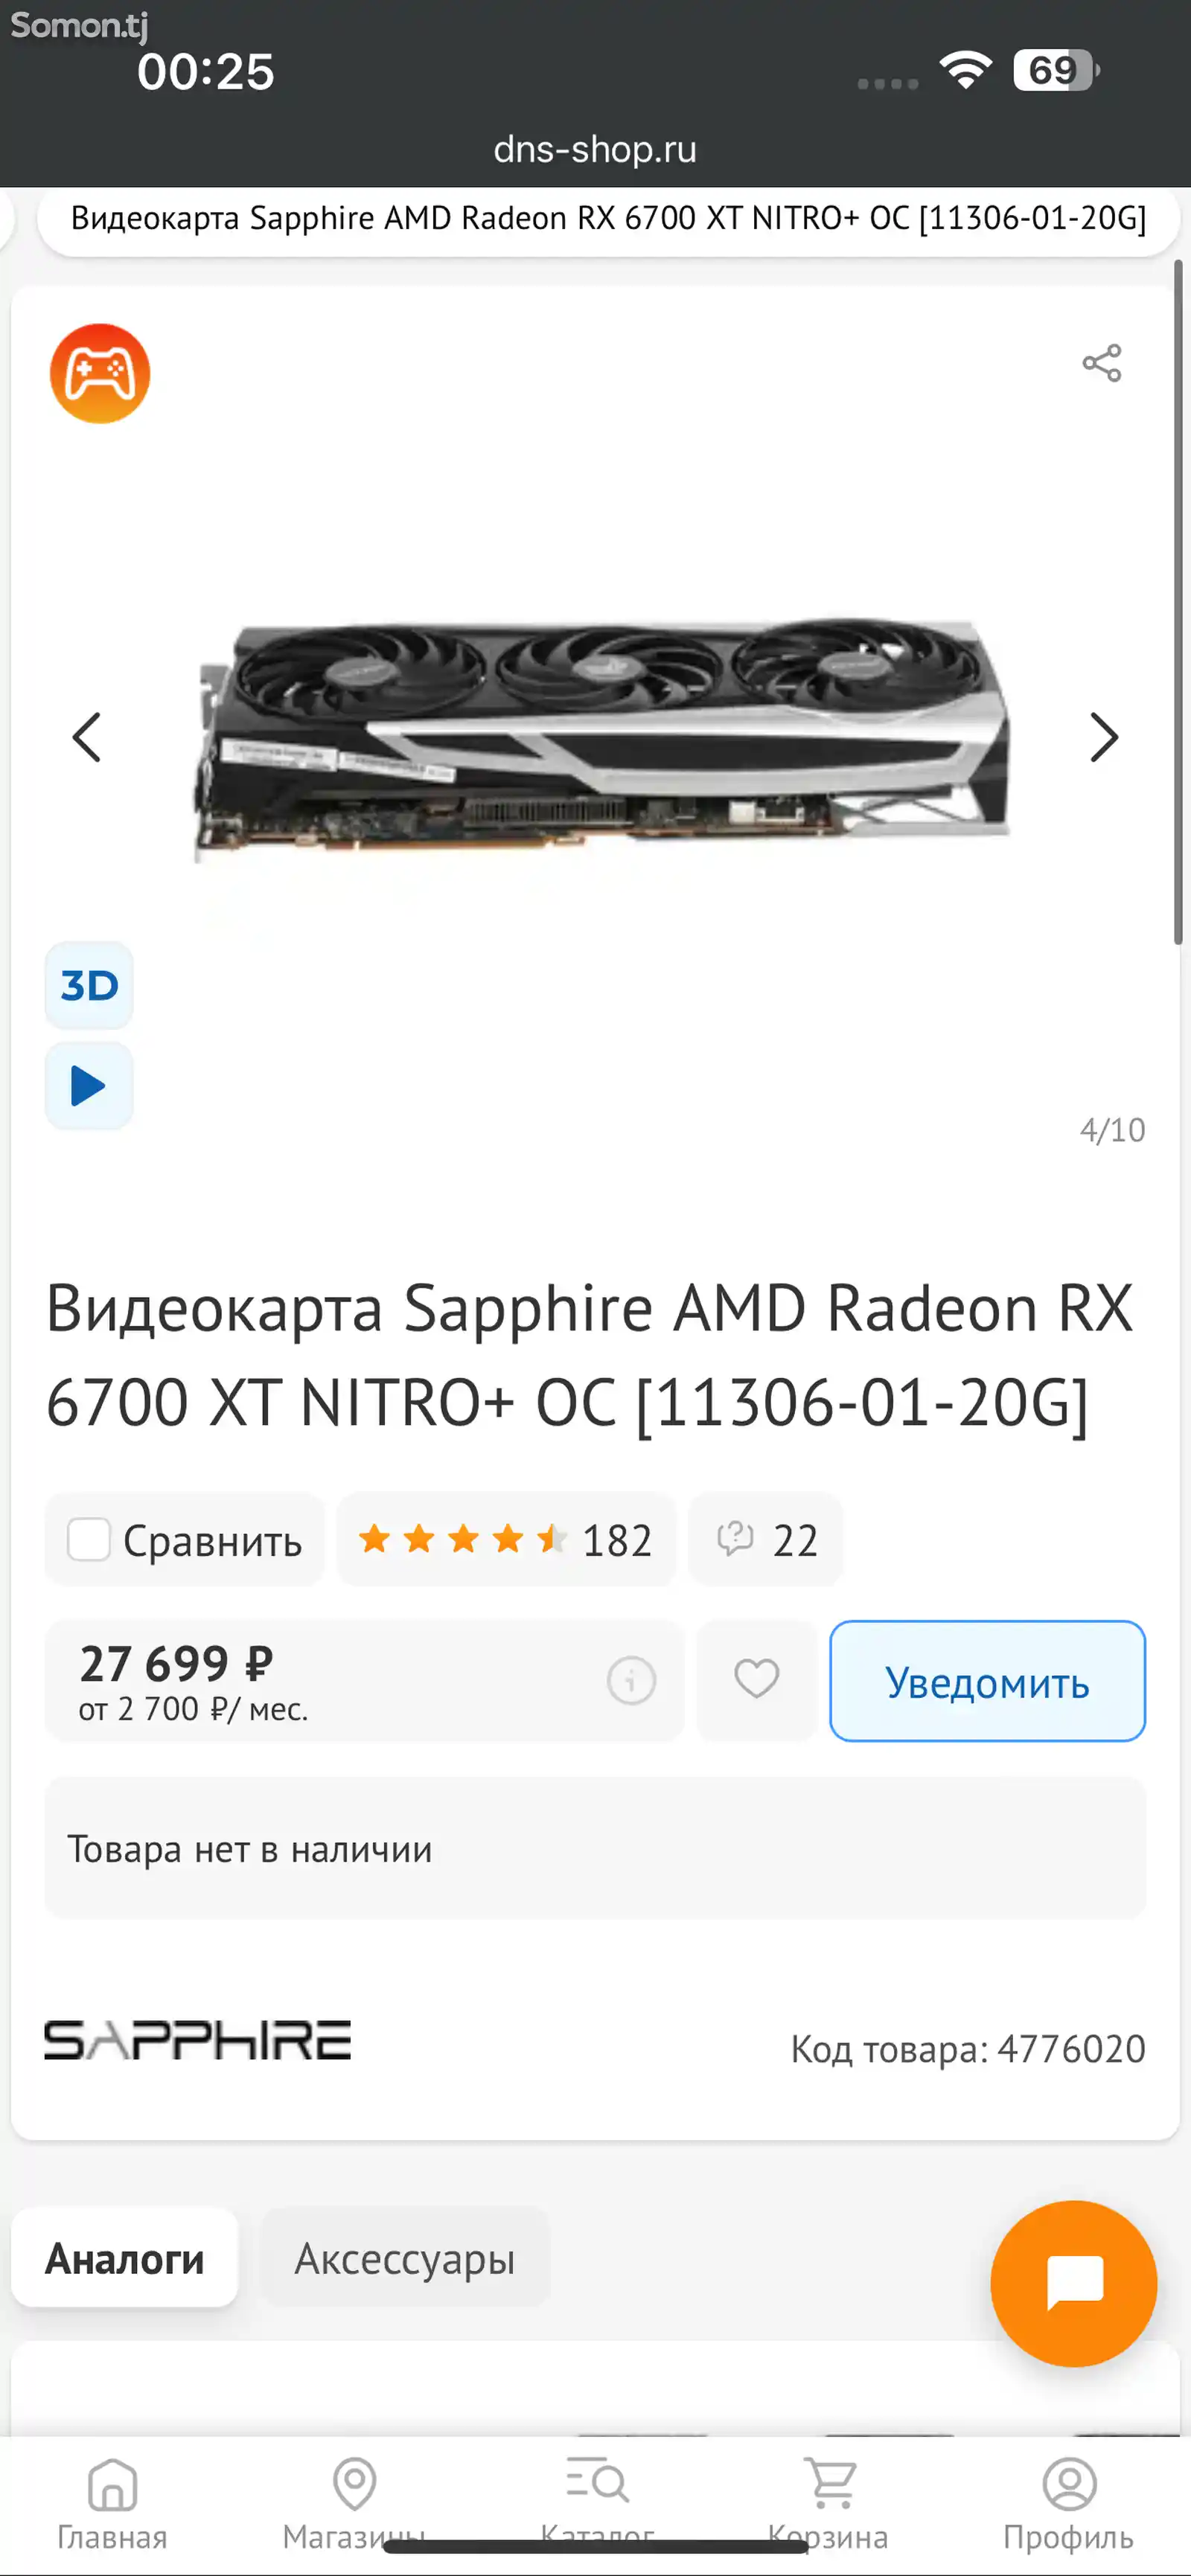 Sapphire AMD Radeon RX 6700 XT NITRO+ OC 12gb-12